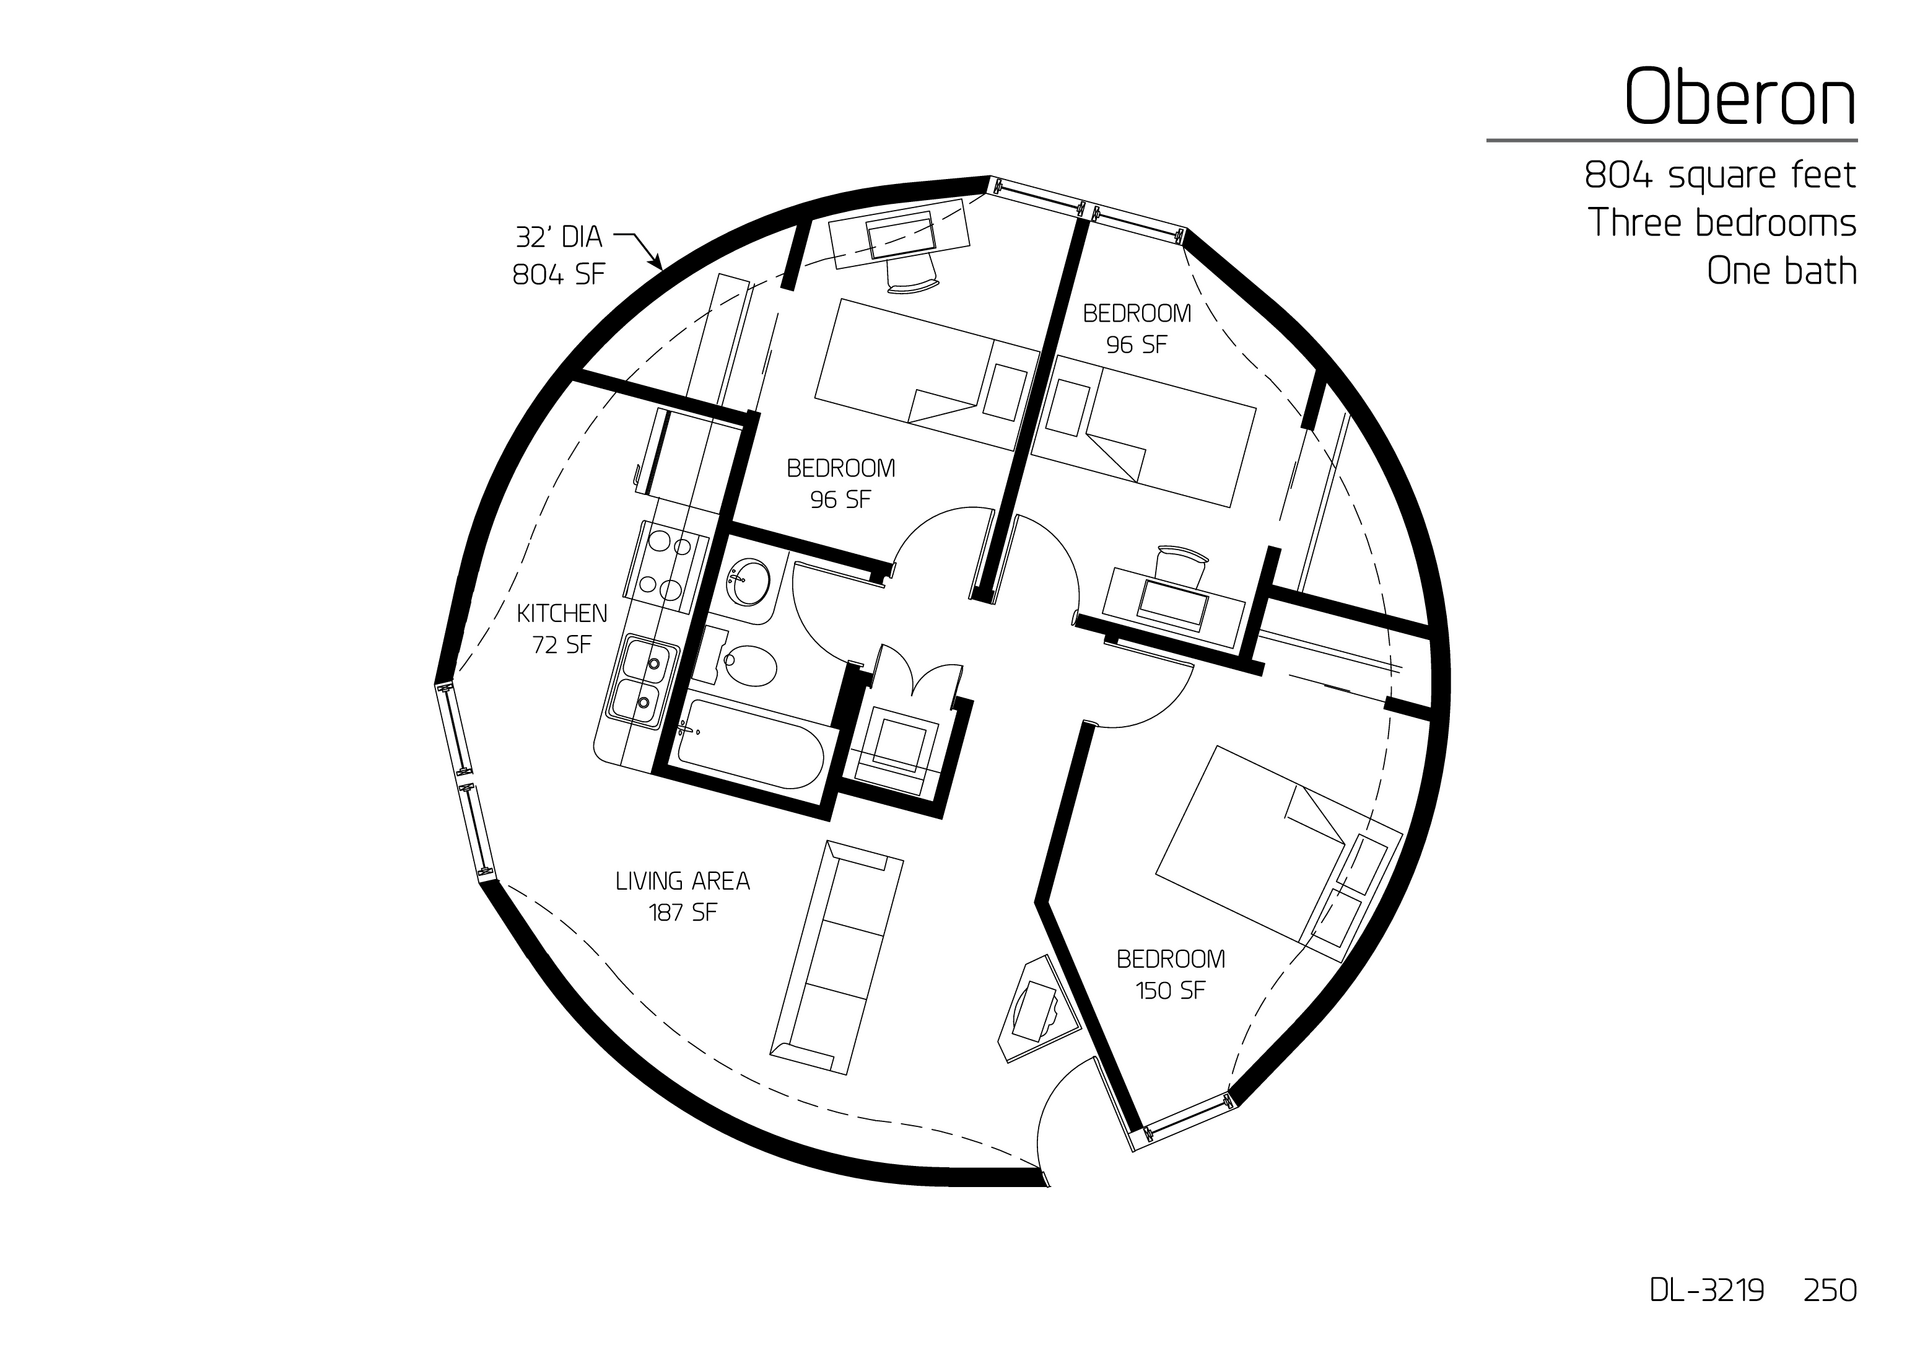 Oberon: 32' Diameter, 804 SF, Three-Bedroom, Two-Bath Floor Plan.